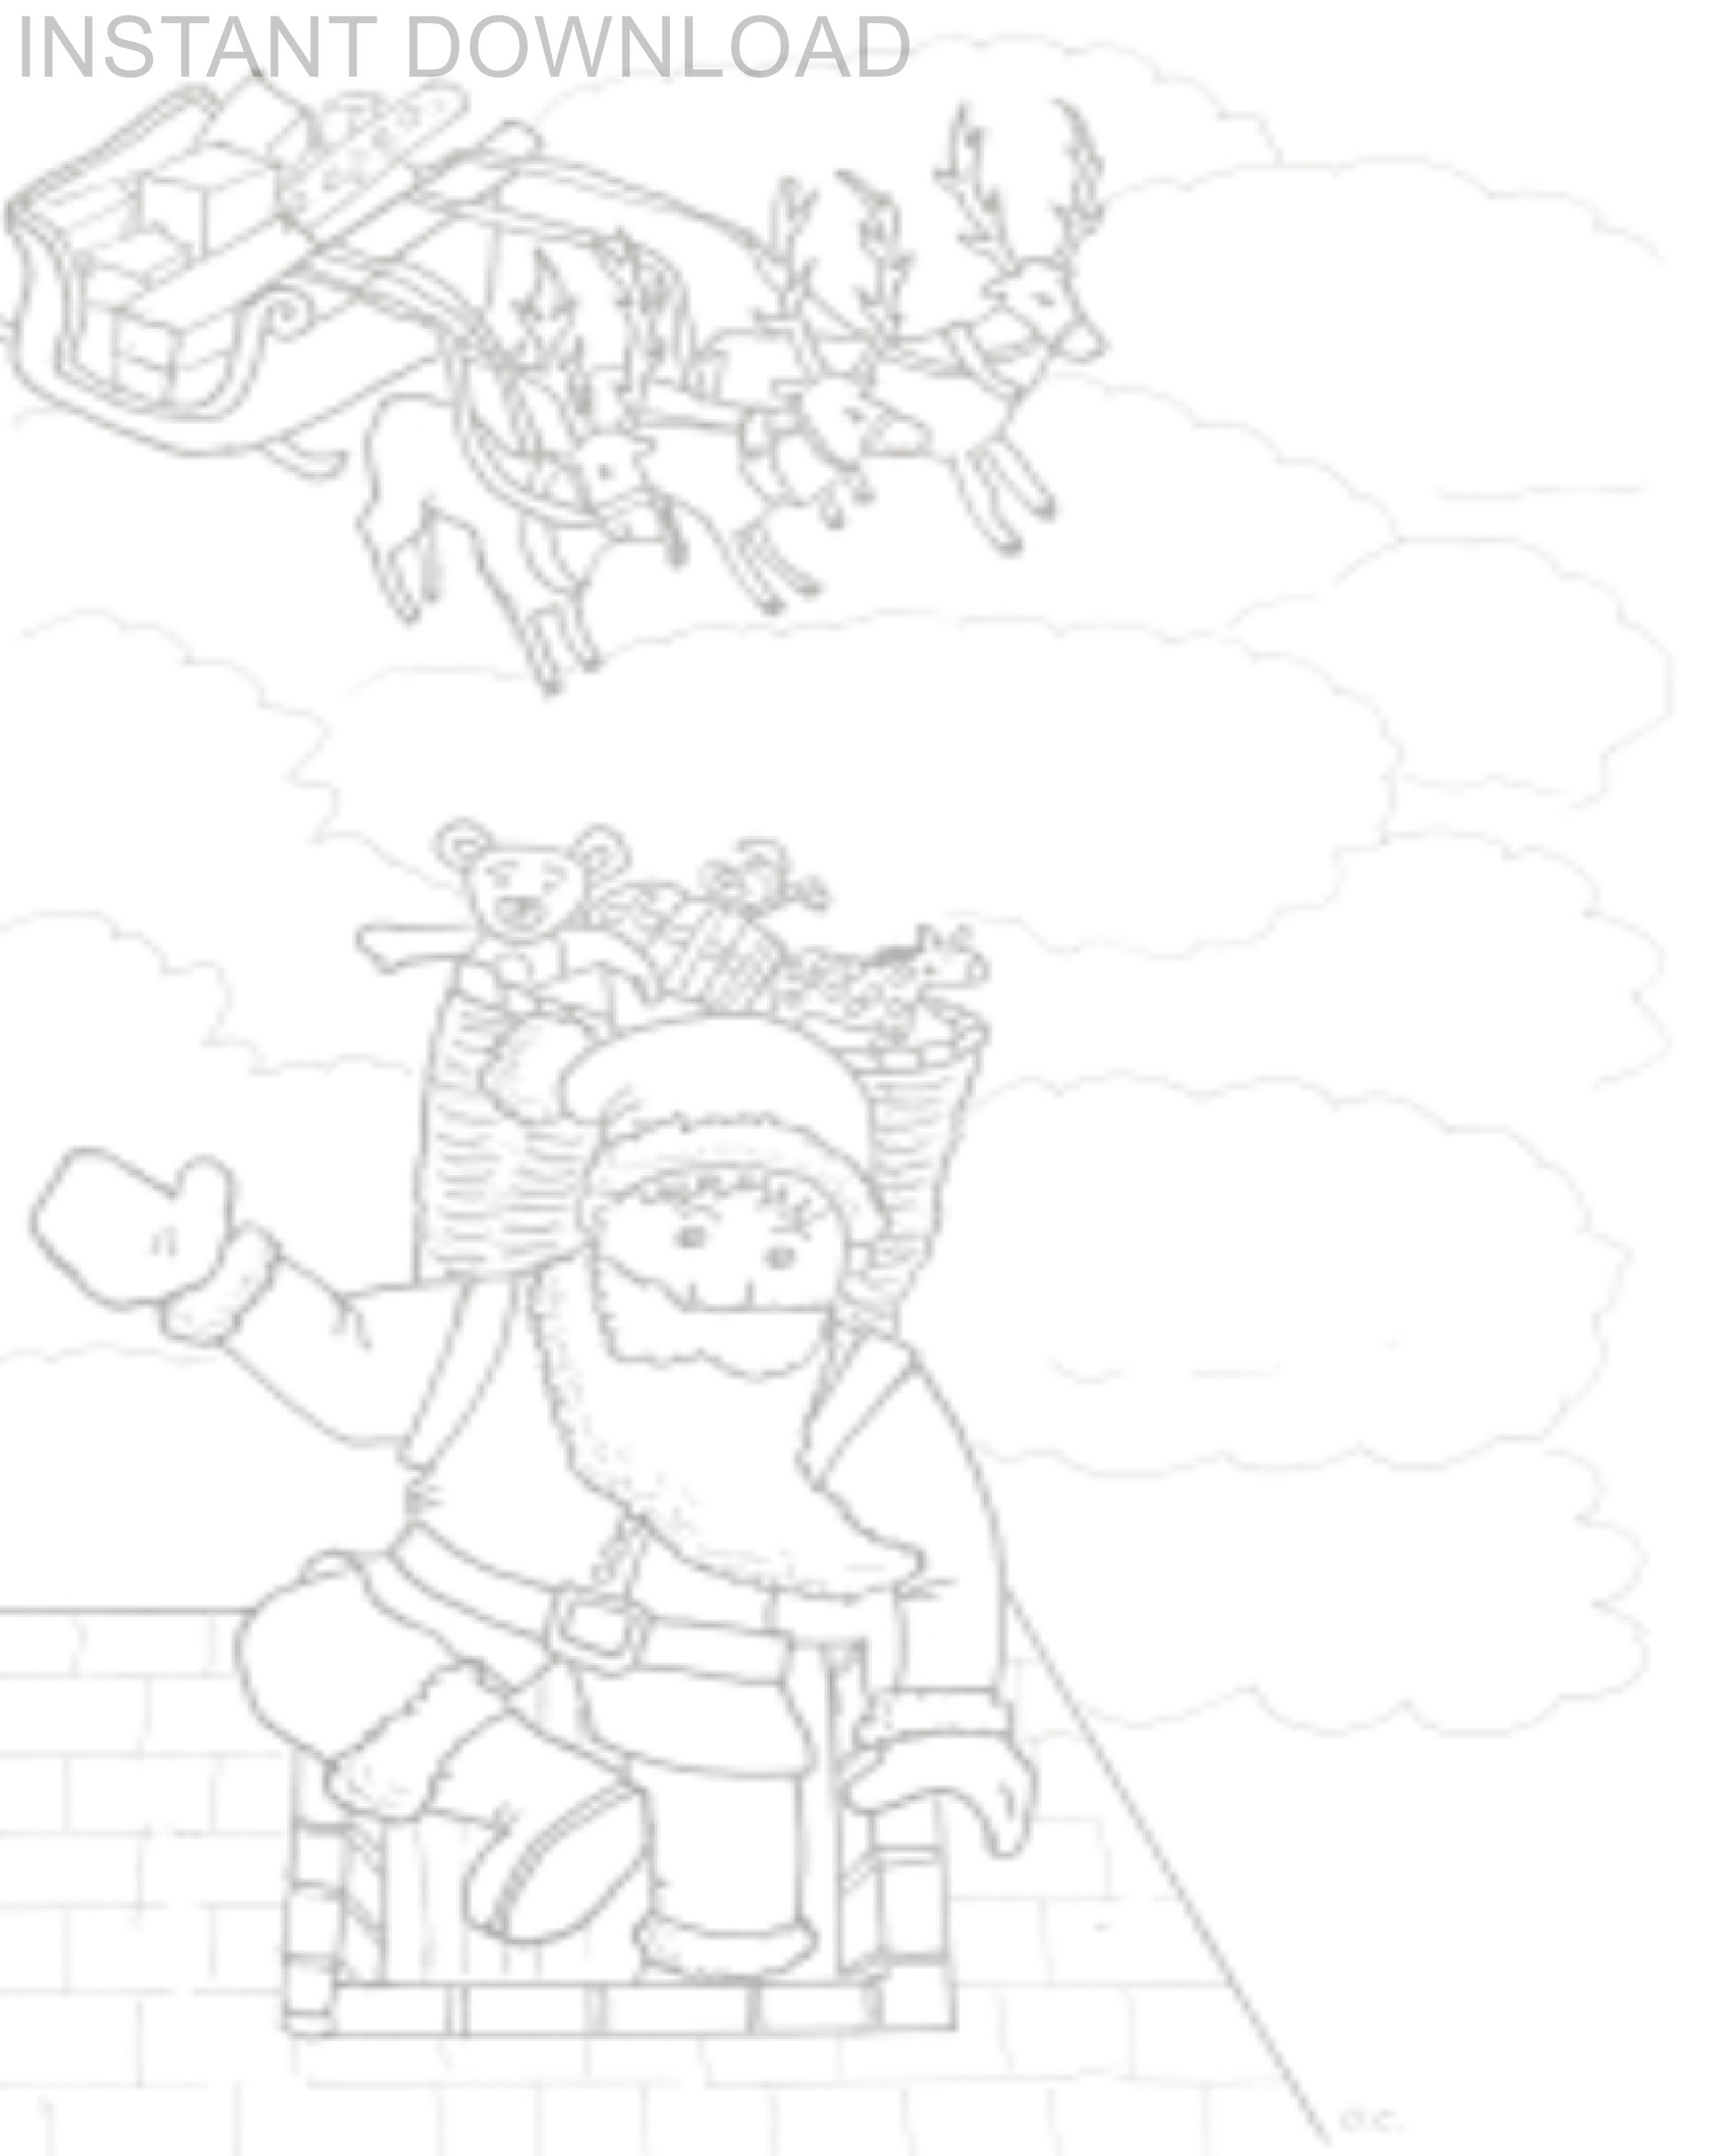 Printable 8 x 10 Santa Going Down Chimney Coloring Page/Instant Download/Digital File/Plus Bonus